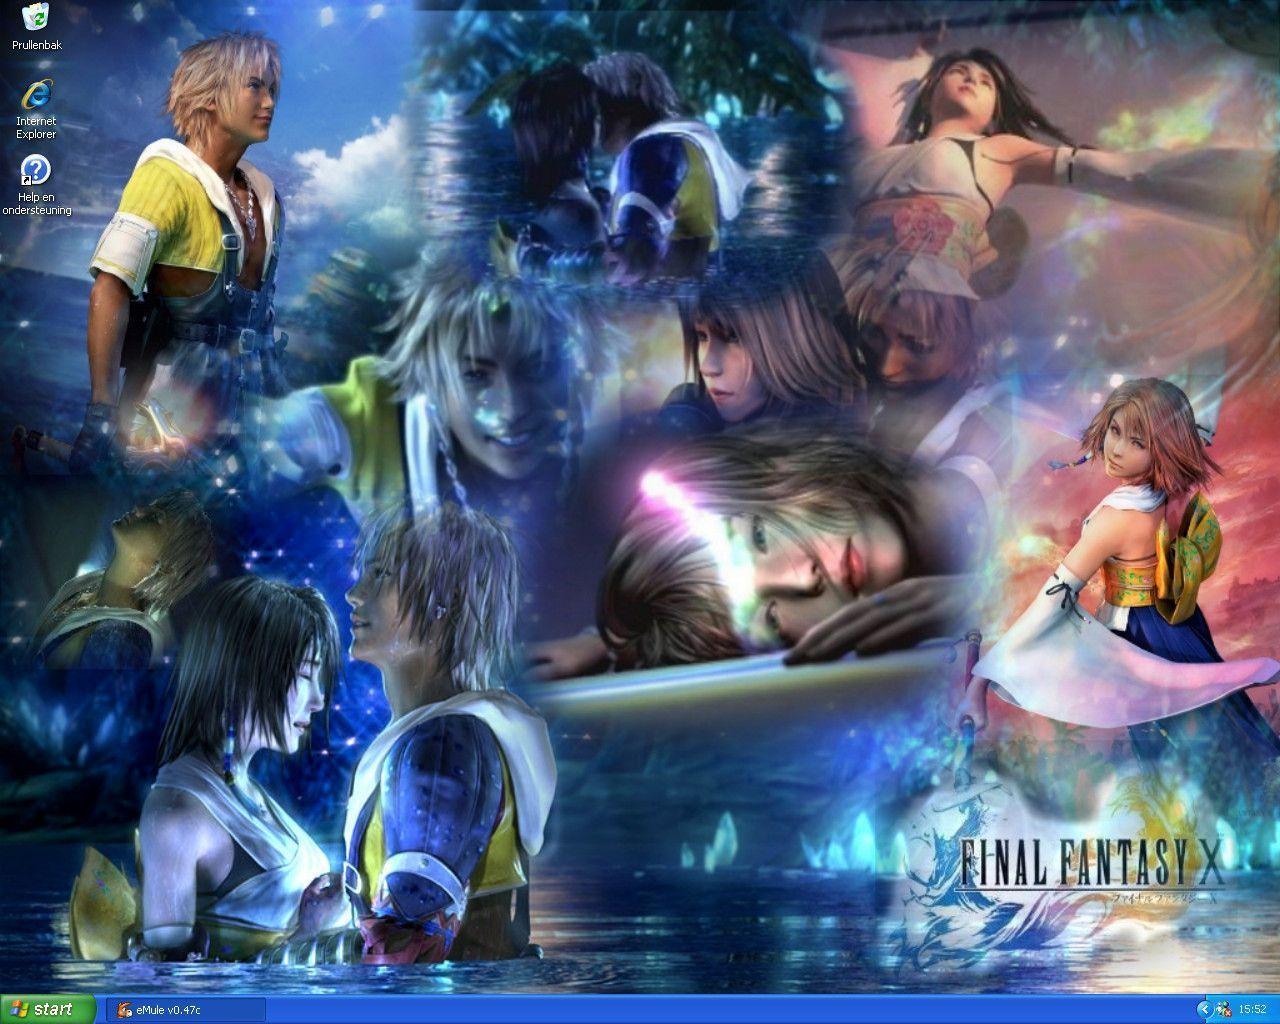 Wallpaper For > Final Fantasy 10 Aeons Wallpaper